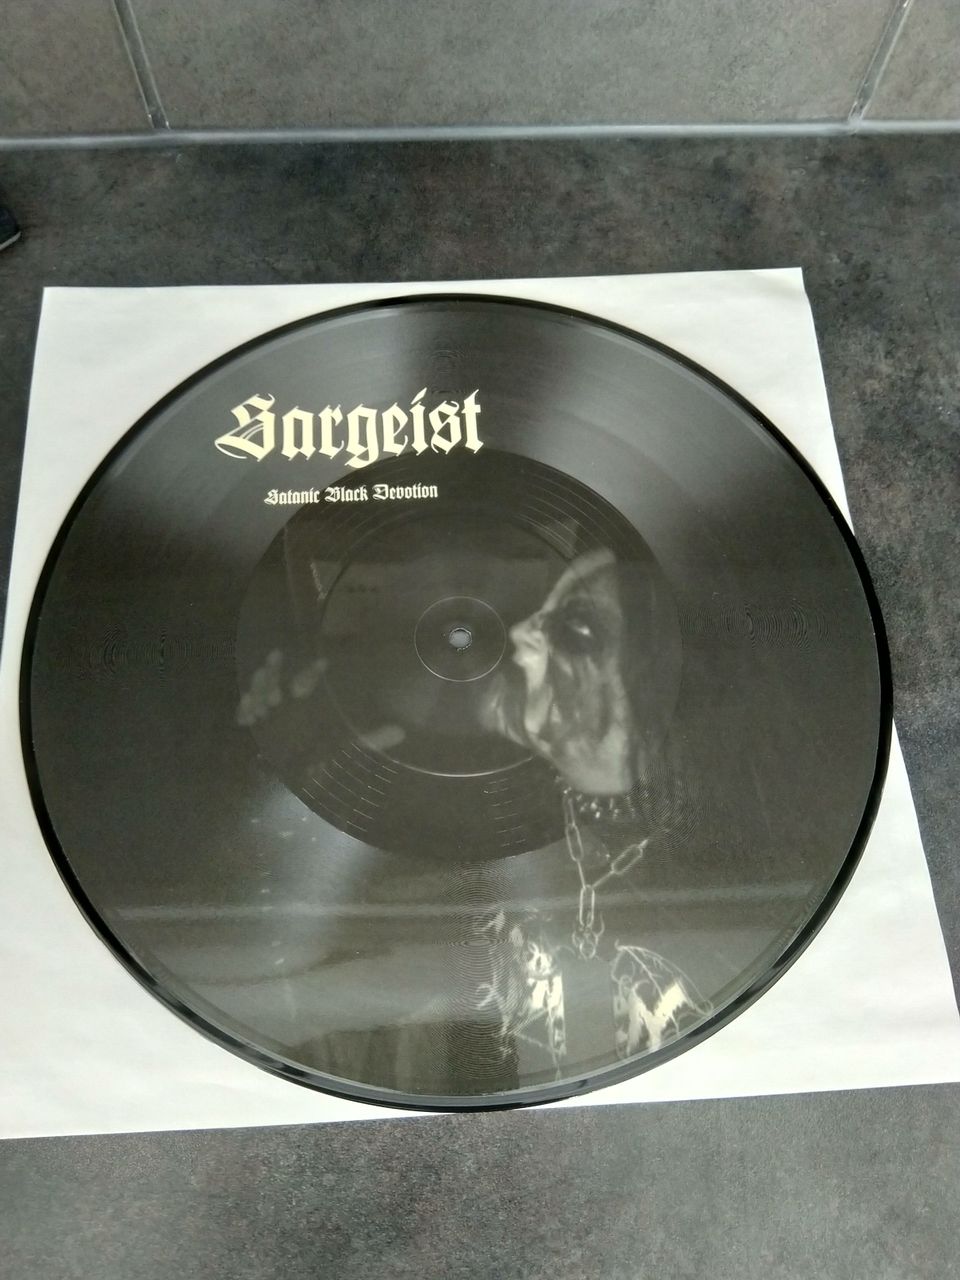 Sargeist - Satanic Black Devotion picture LP, RARE!!!